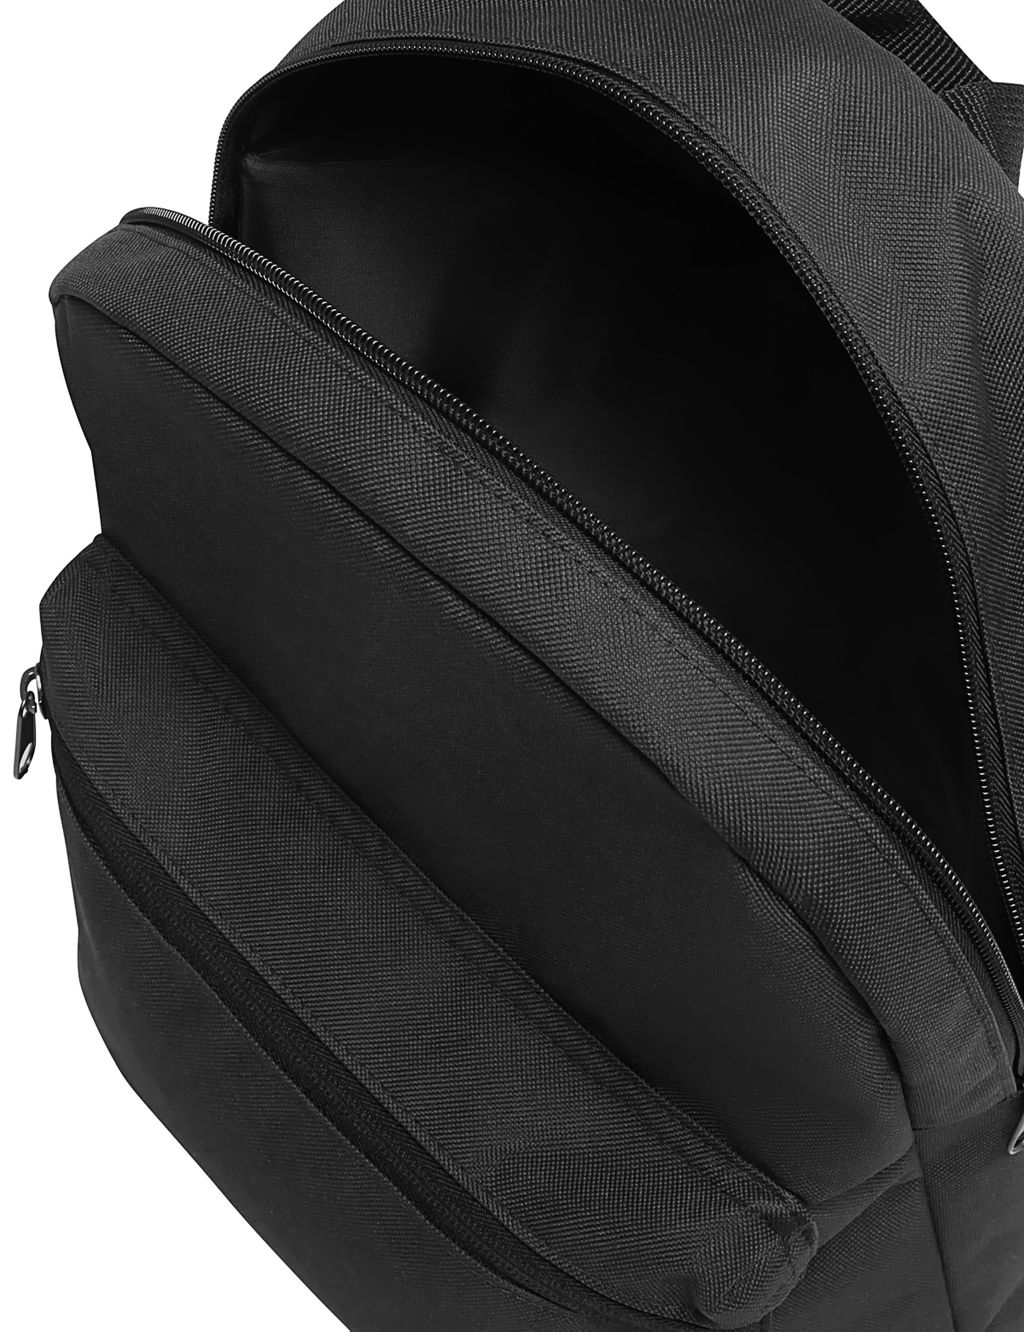 Buy Backpack | Lyle & Scott | M&S